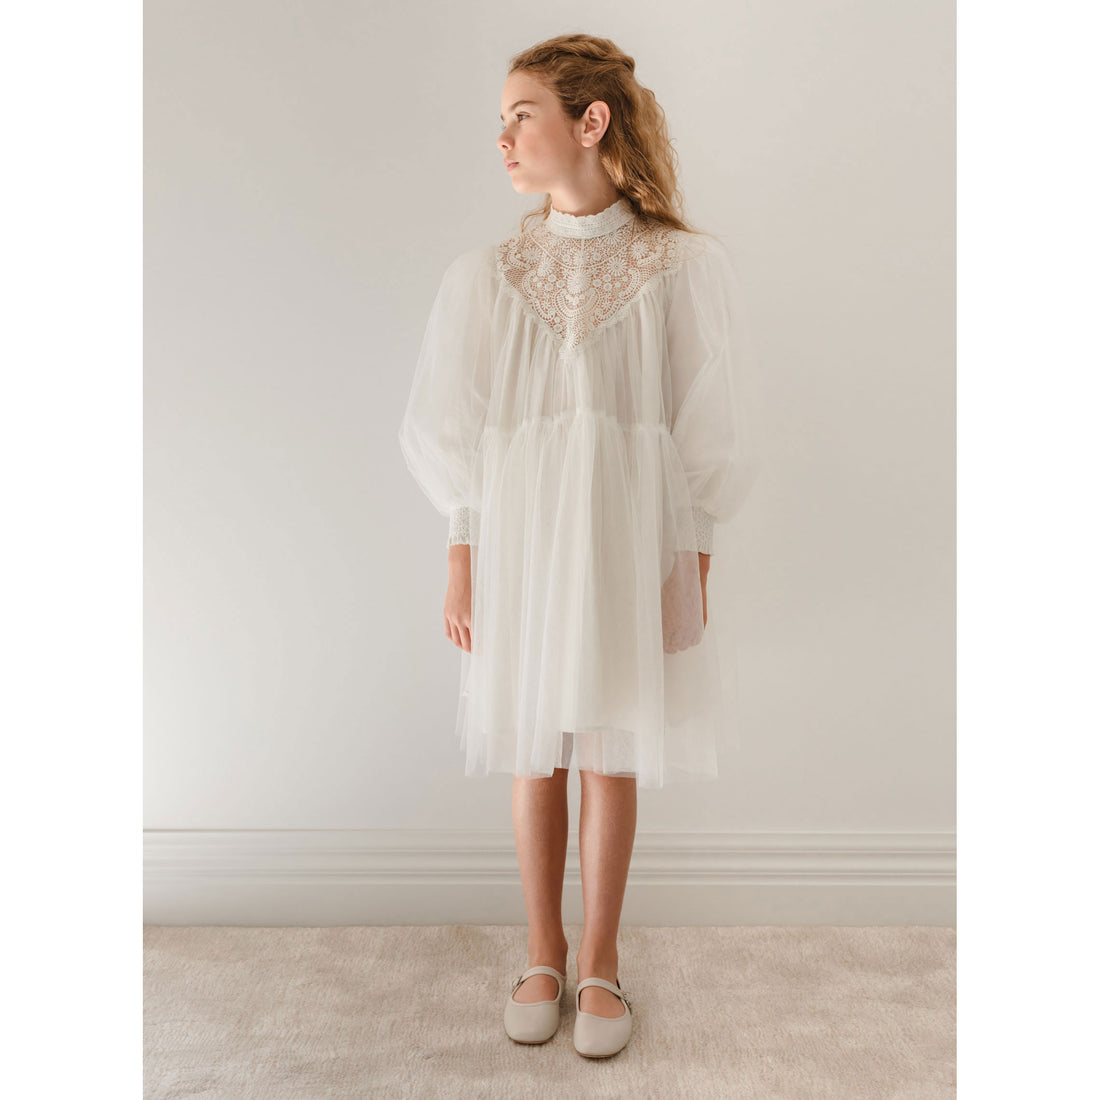 Petite Amalie  Ivory Lace Applique Tulle Baydoll Dress